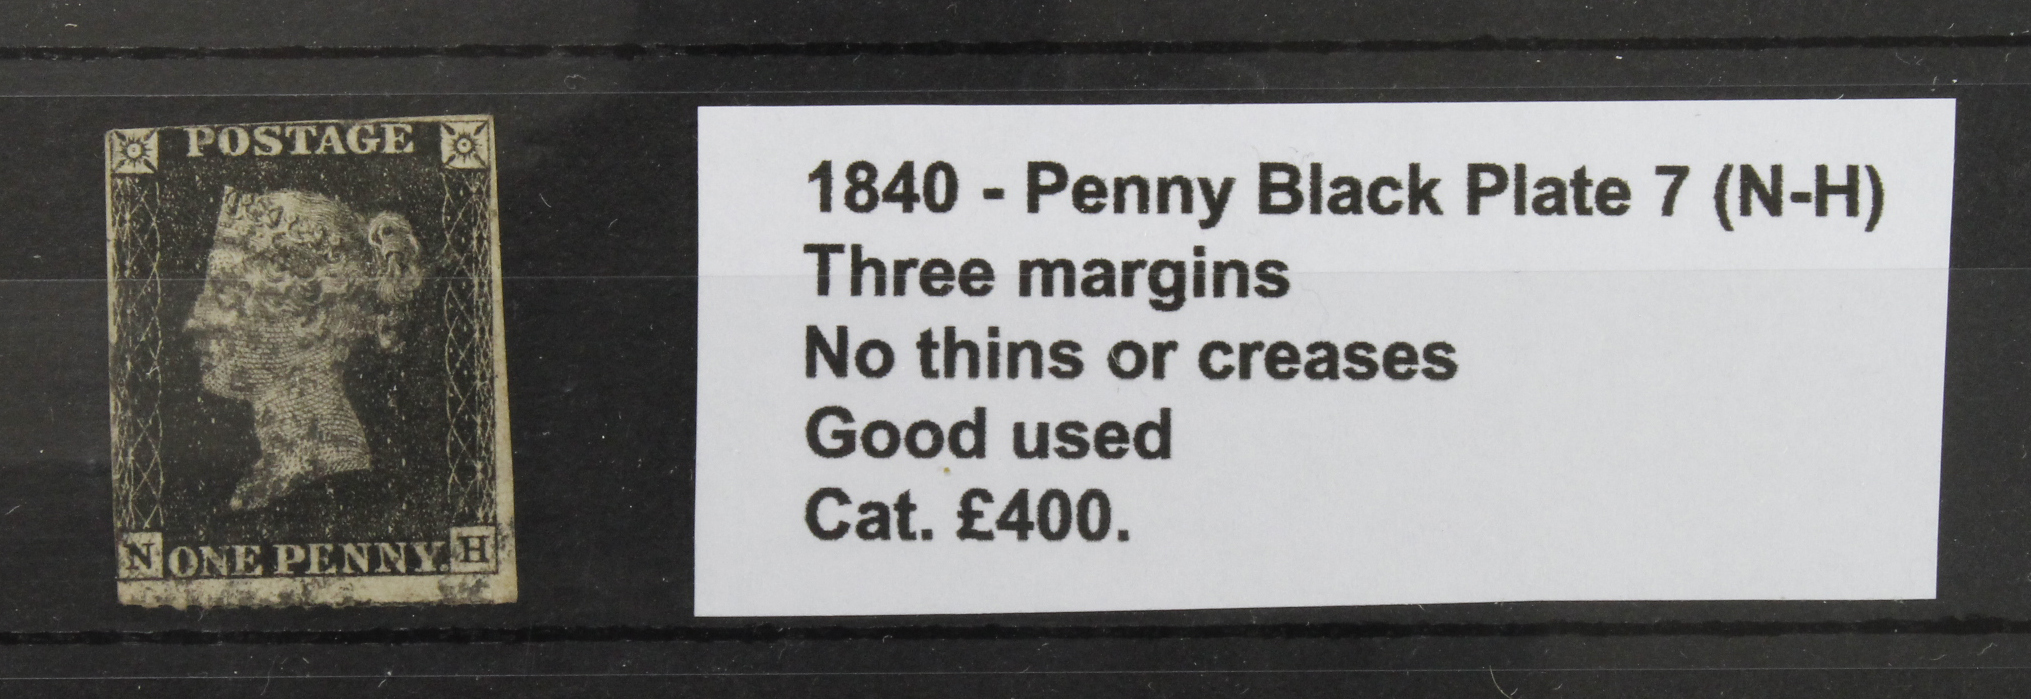 GB - 1840 Penny Black, Plate 7 (N-H), three margins, no thins or creases, good used, cat £400